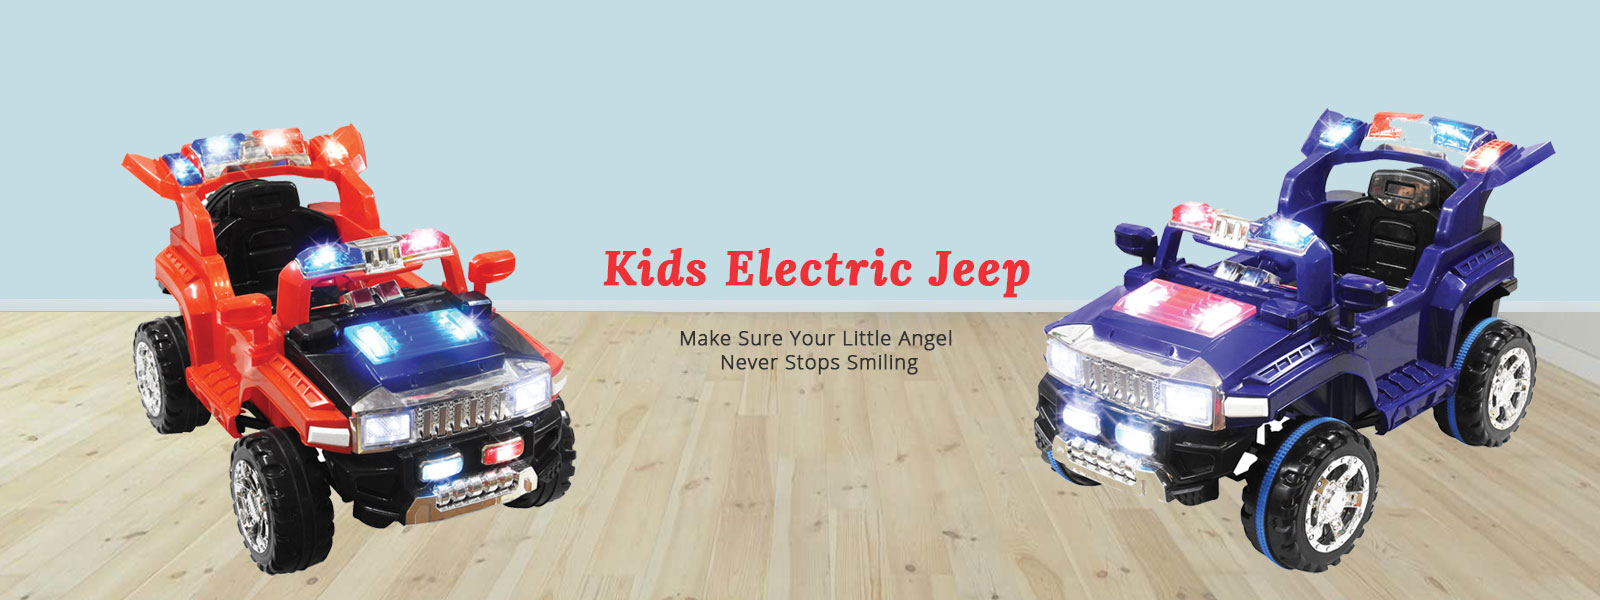 Kids Electric Jeep Manufacturers in Navi Mumbai